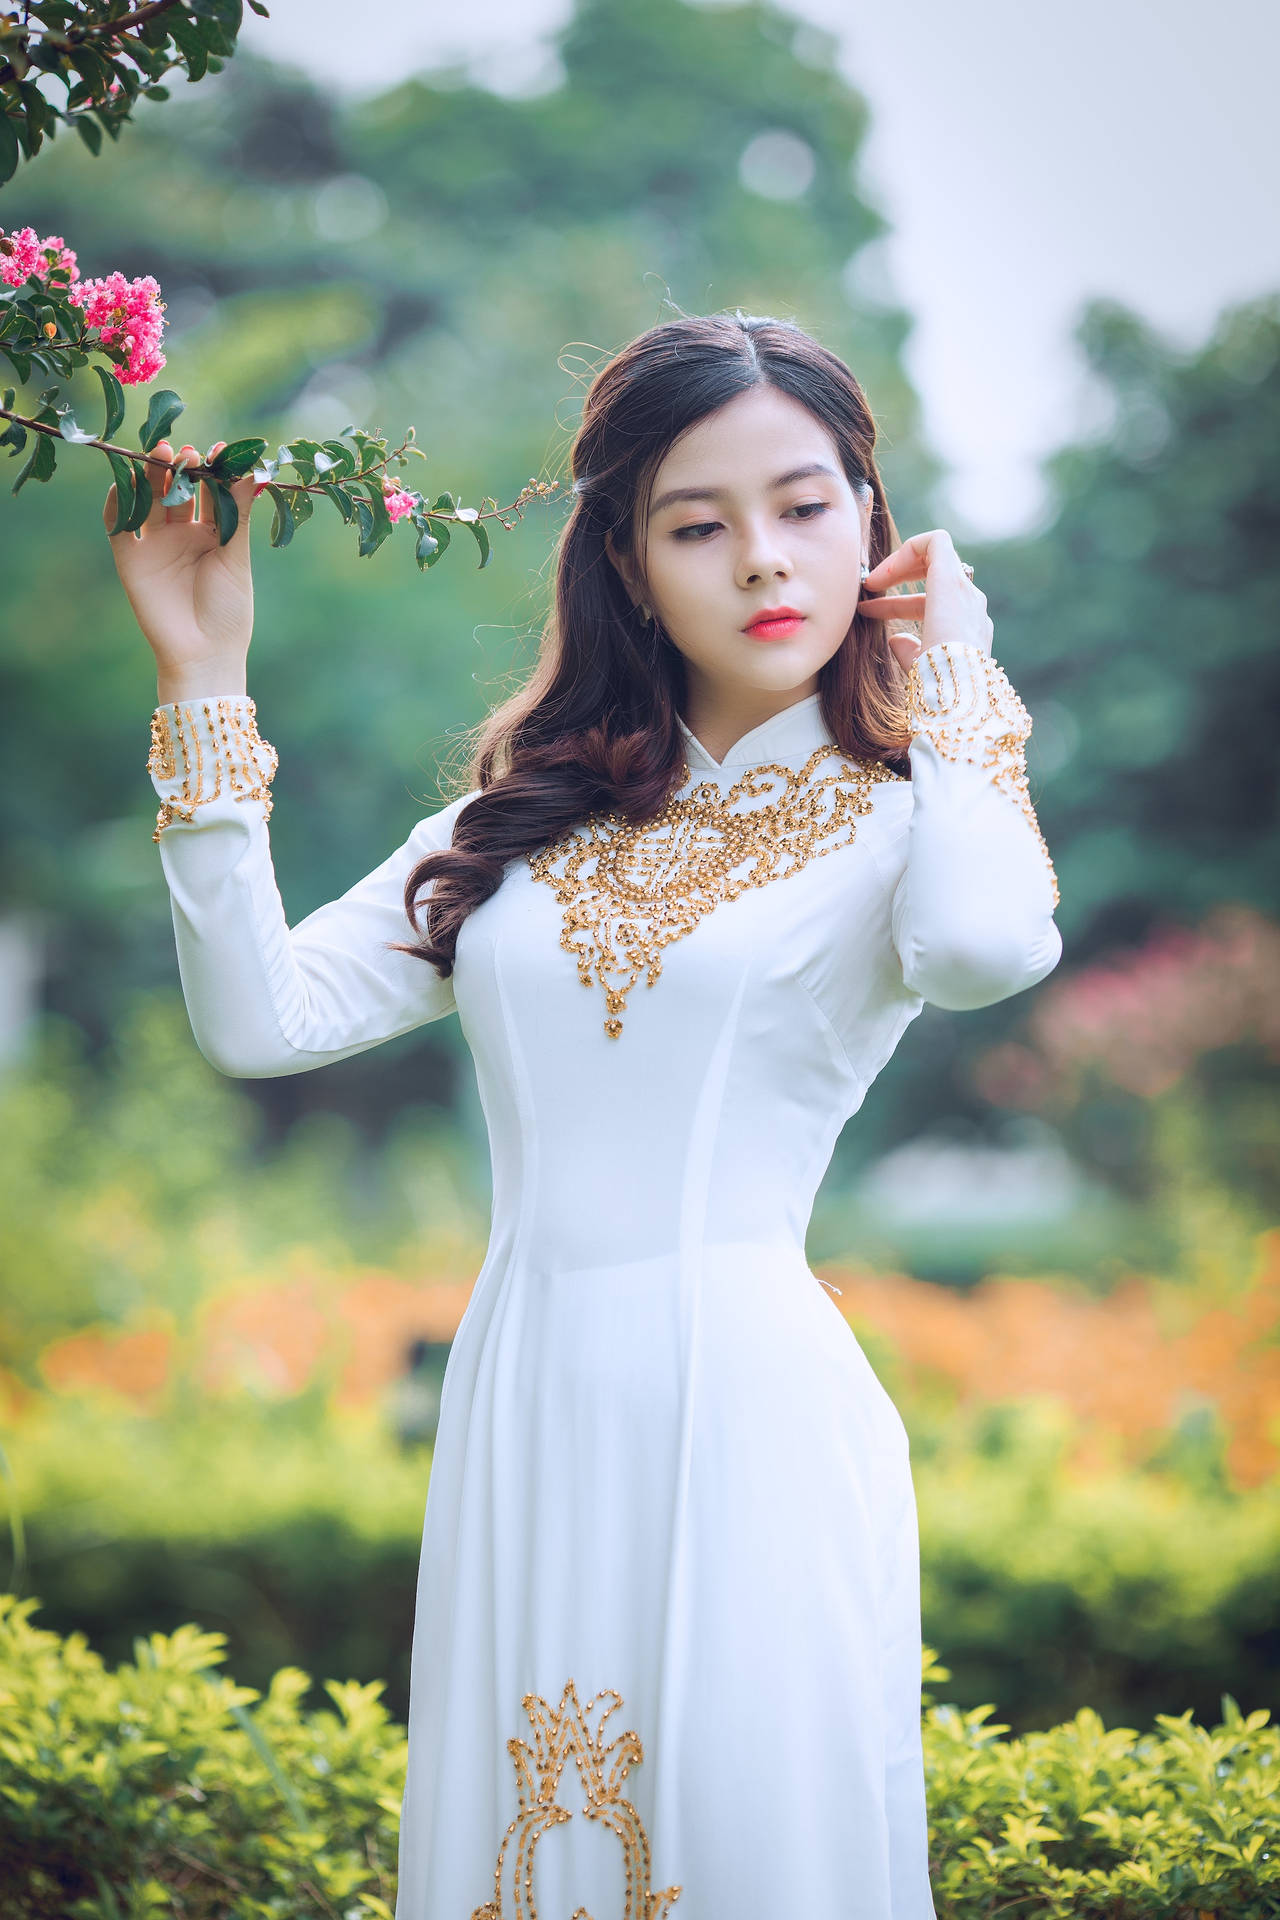 Asian Woman In Stunning White Dress